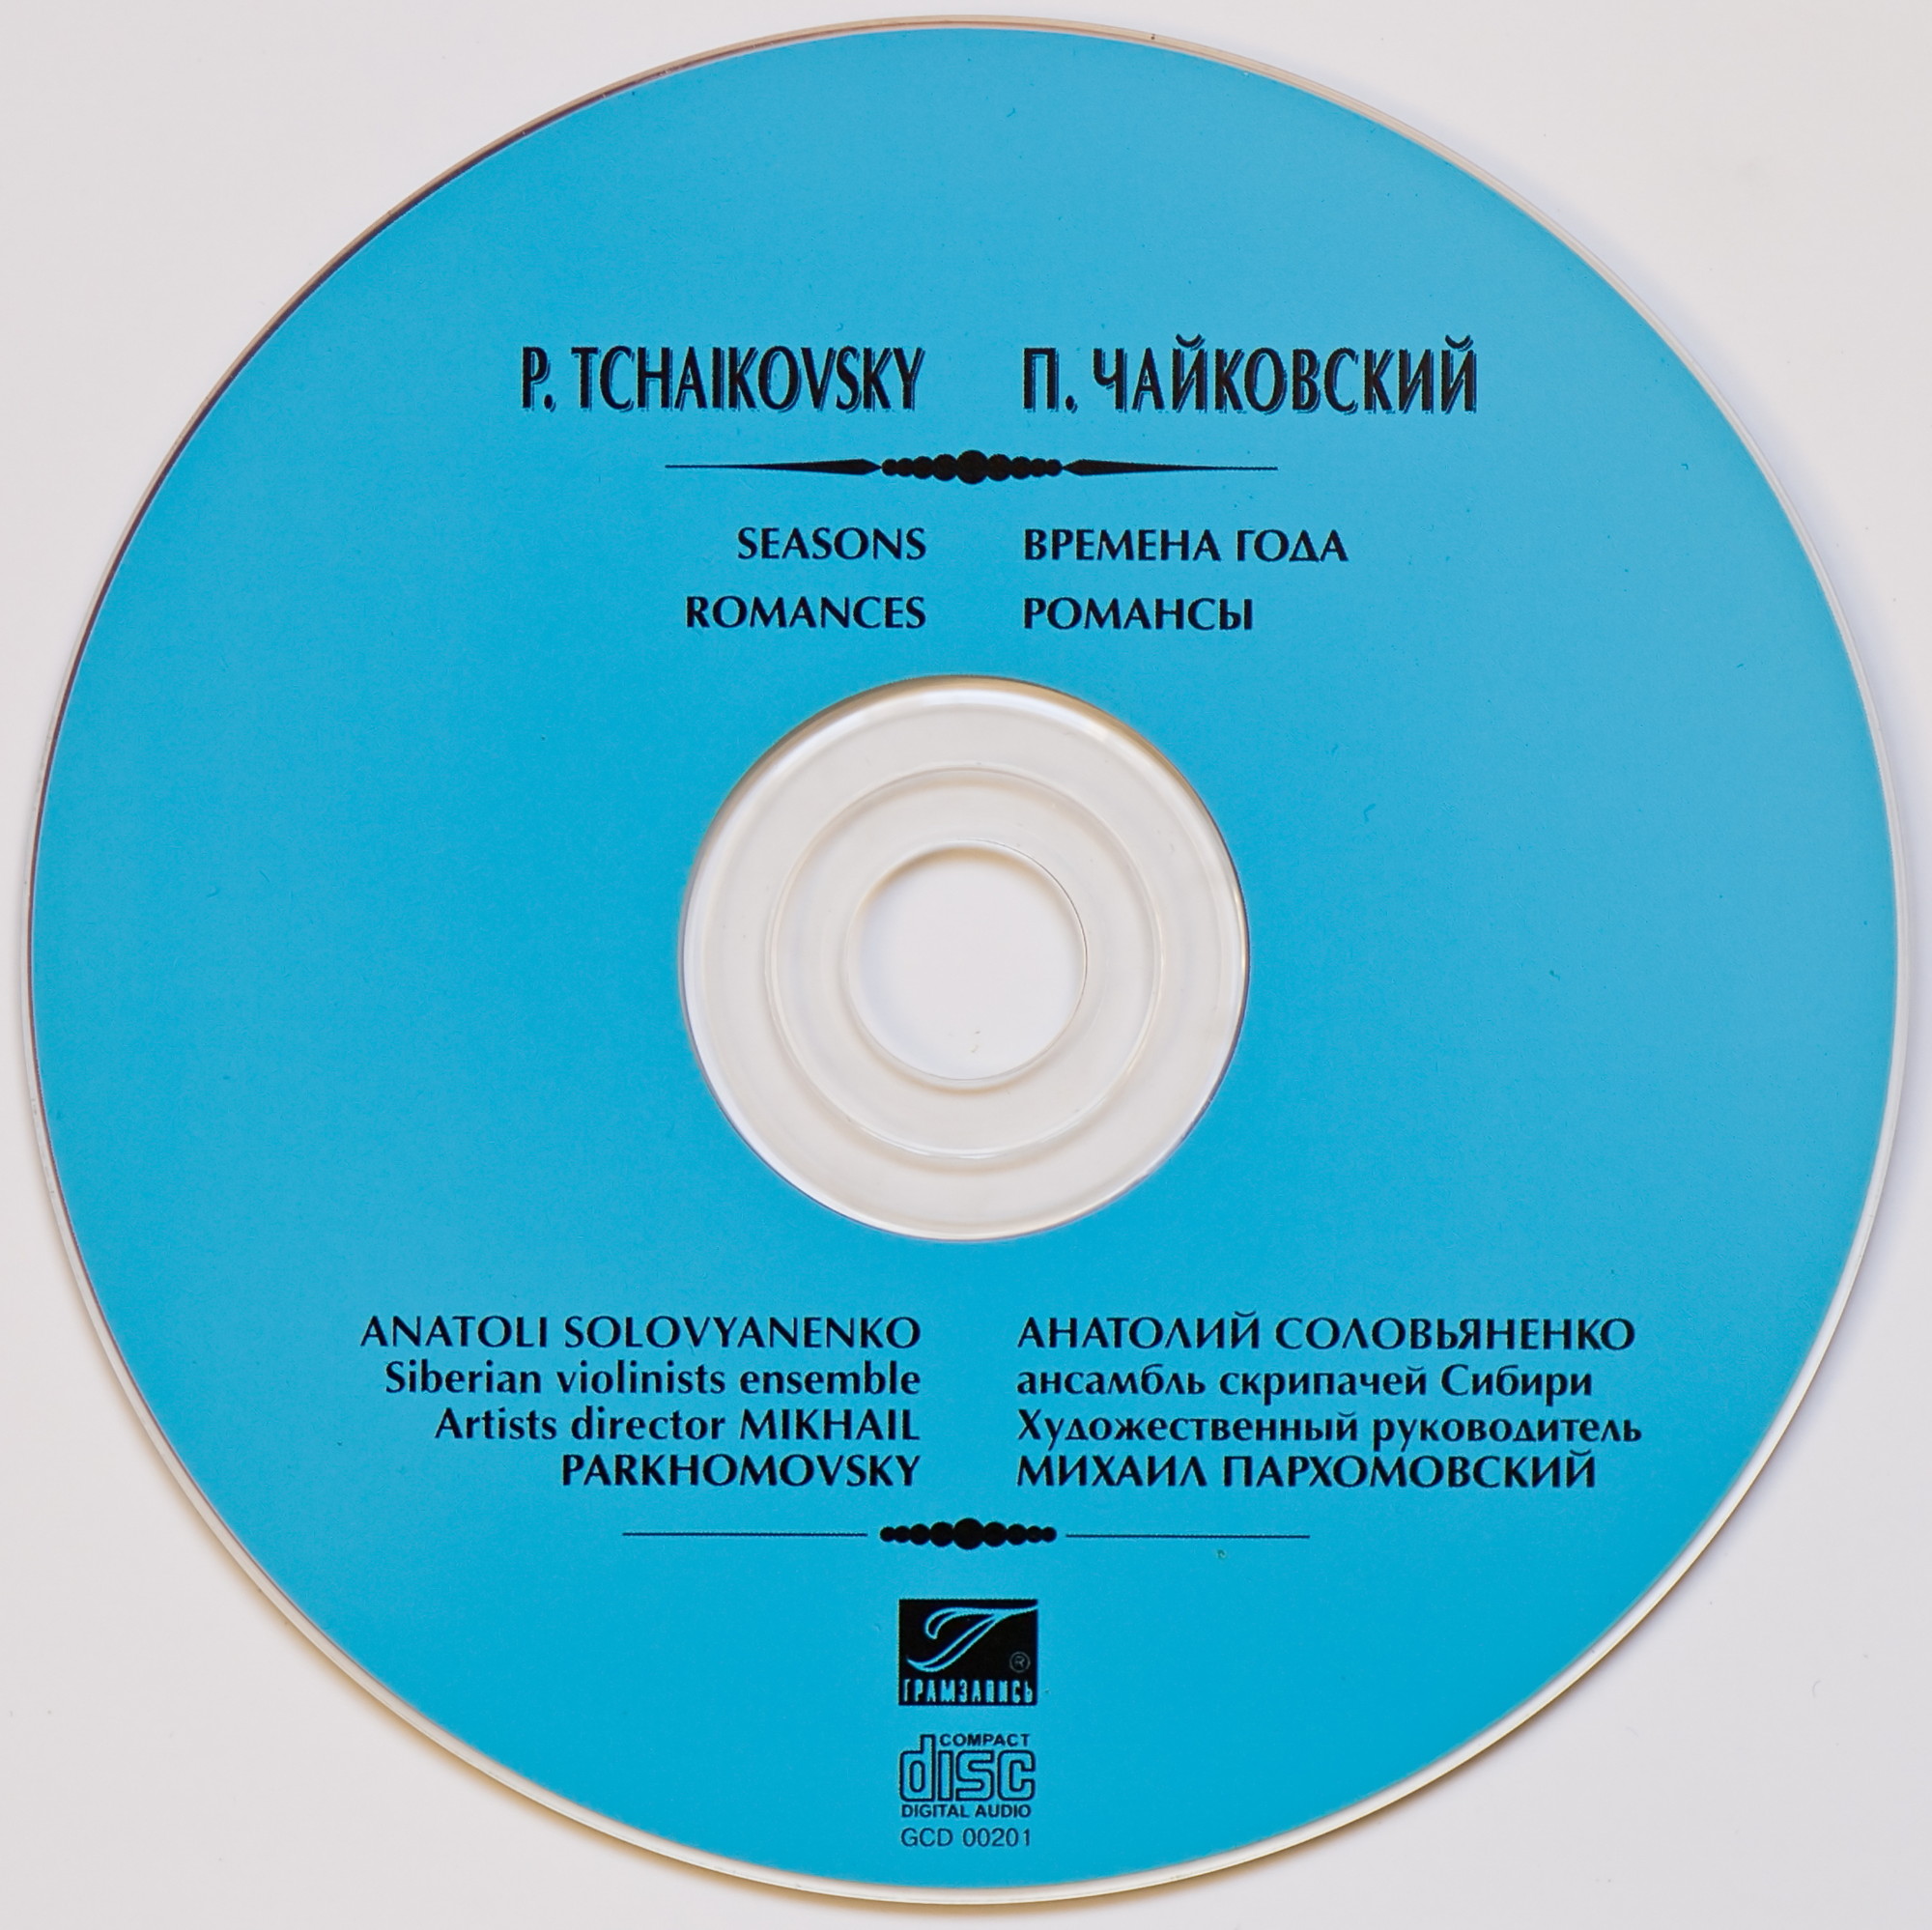 Tchaikovsky - Seasons, Romances - A.Solovyanenko, Siberian Violinests Ensemble - M.Parkhomovsky